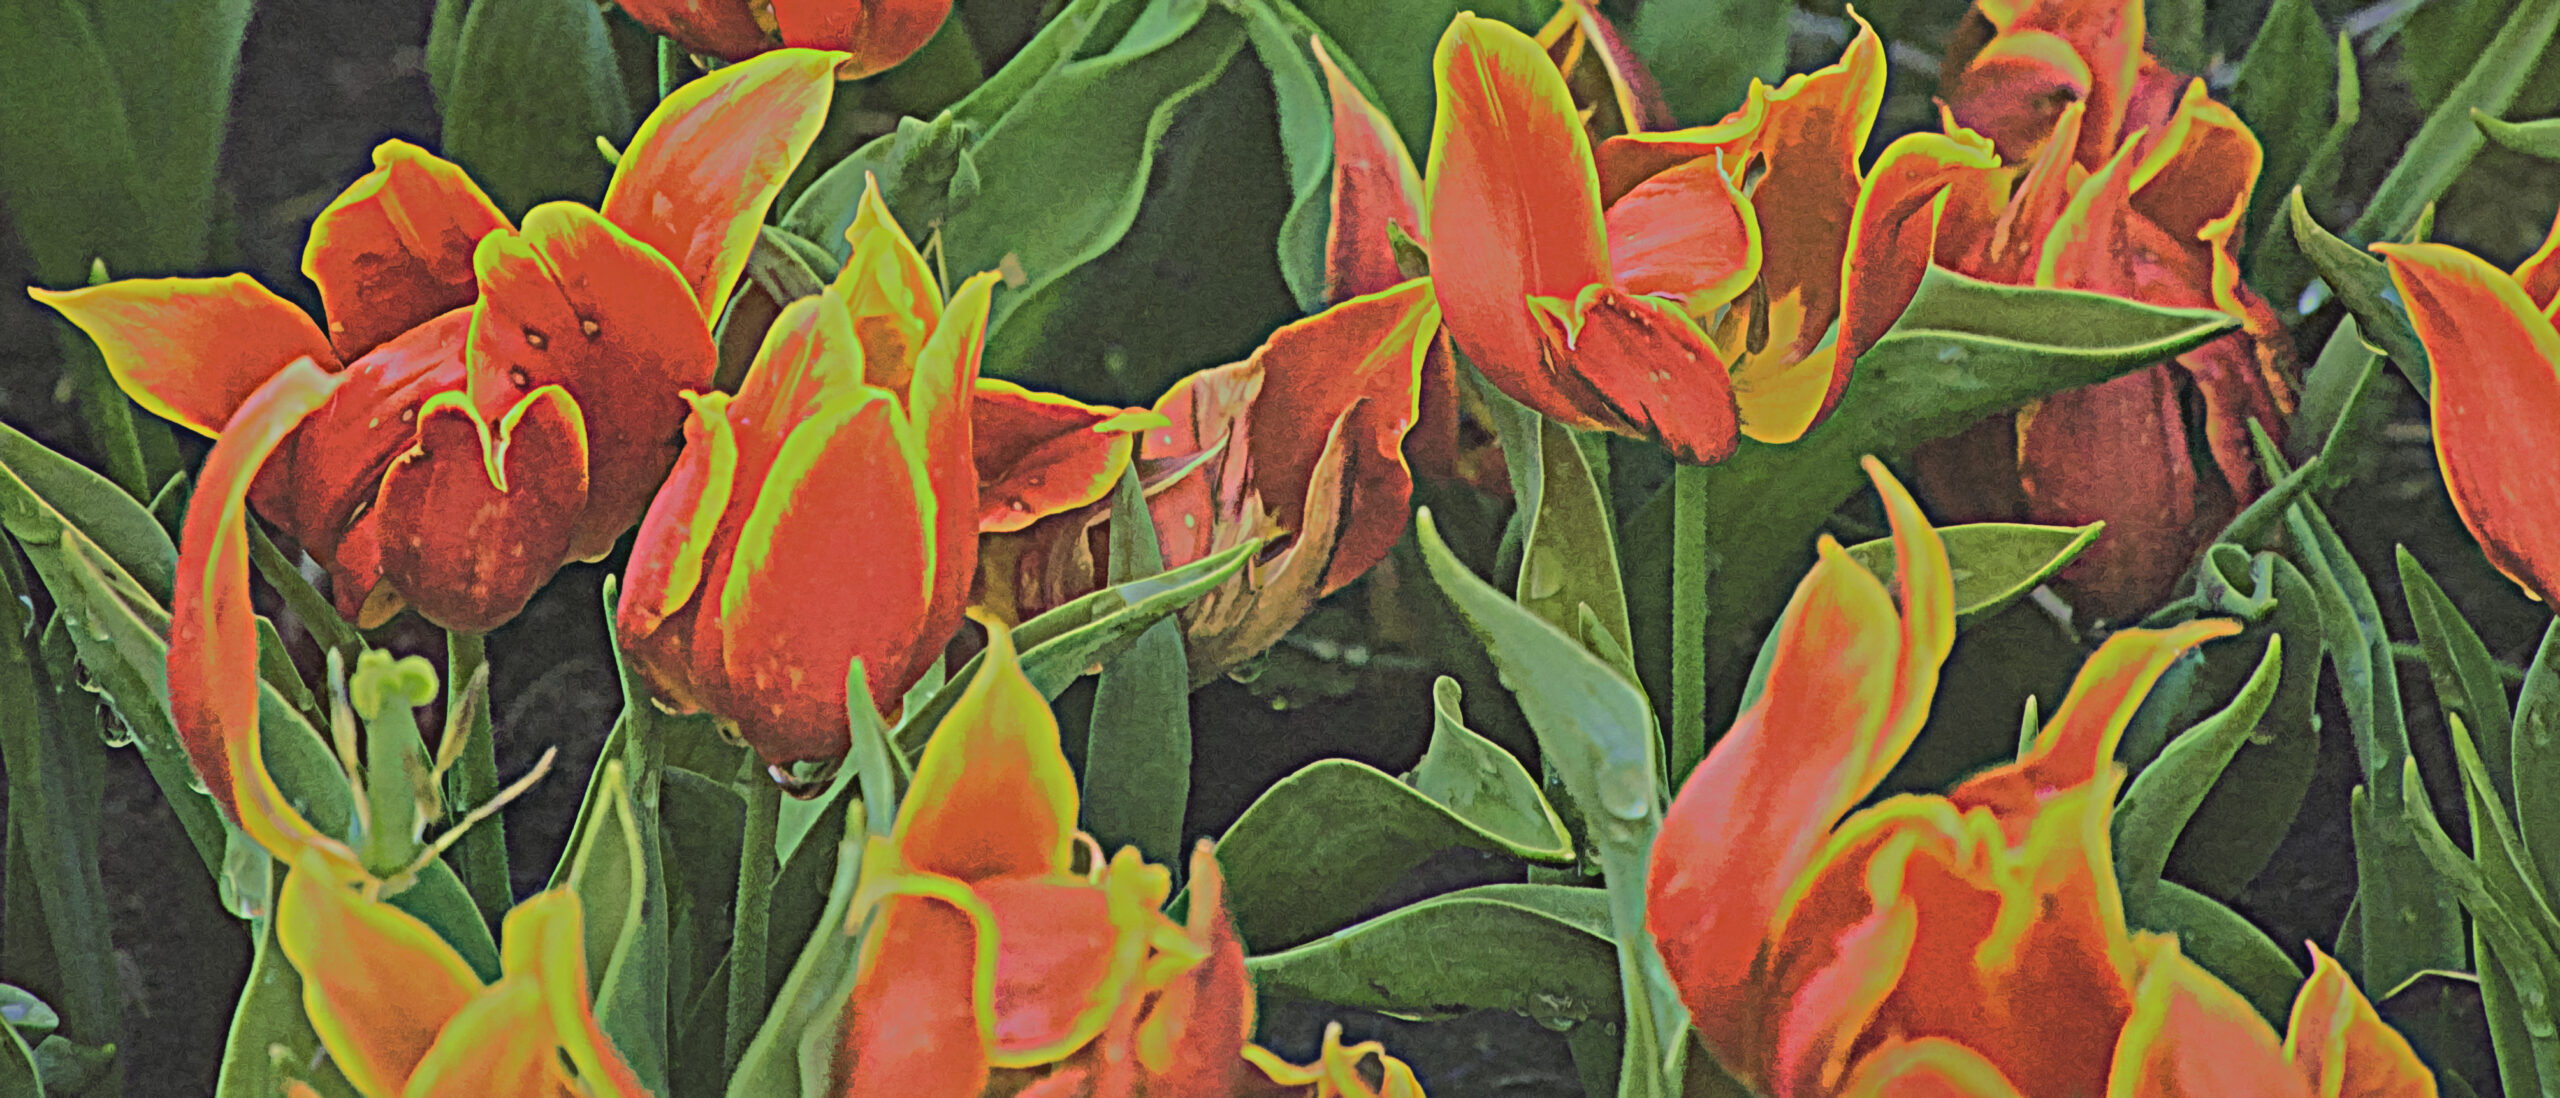 Orange tulips edged in yellow